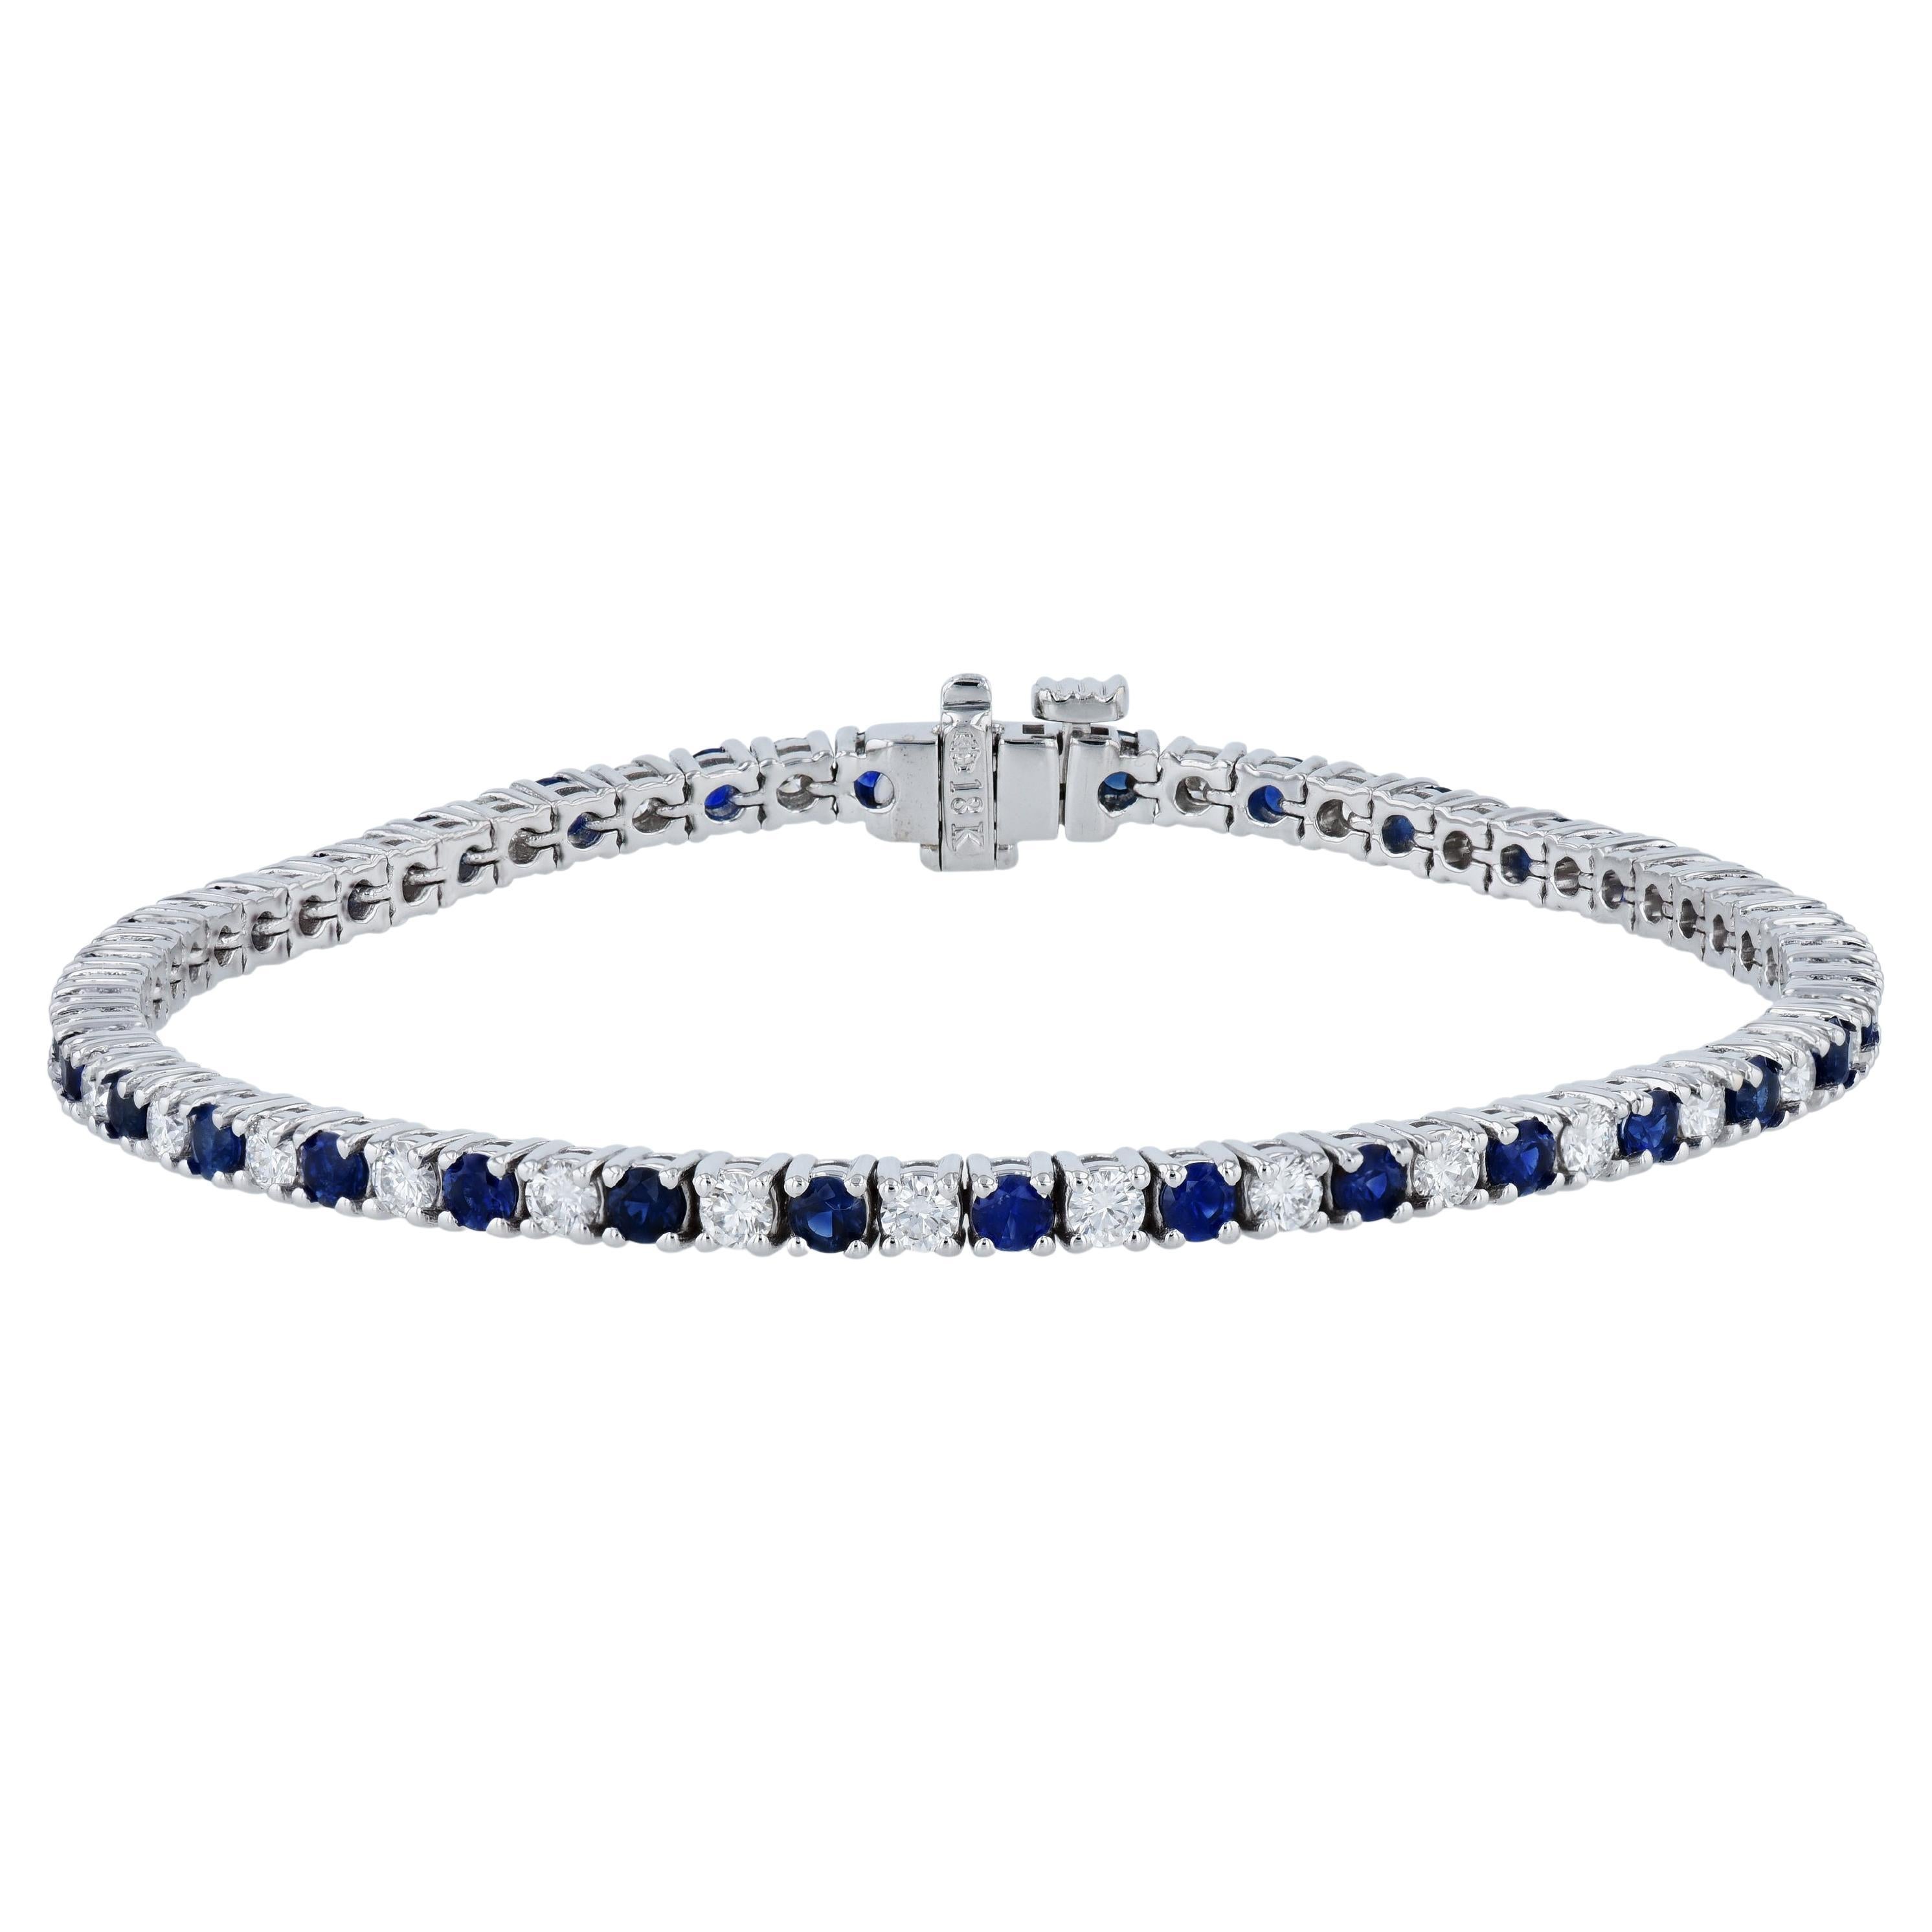 Bracelet tennis en or blanc, saphir bleu royal et diamants